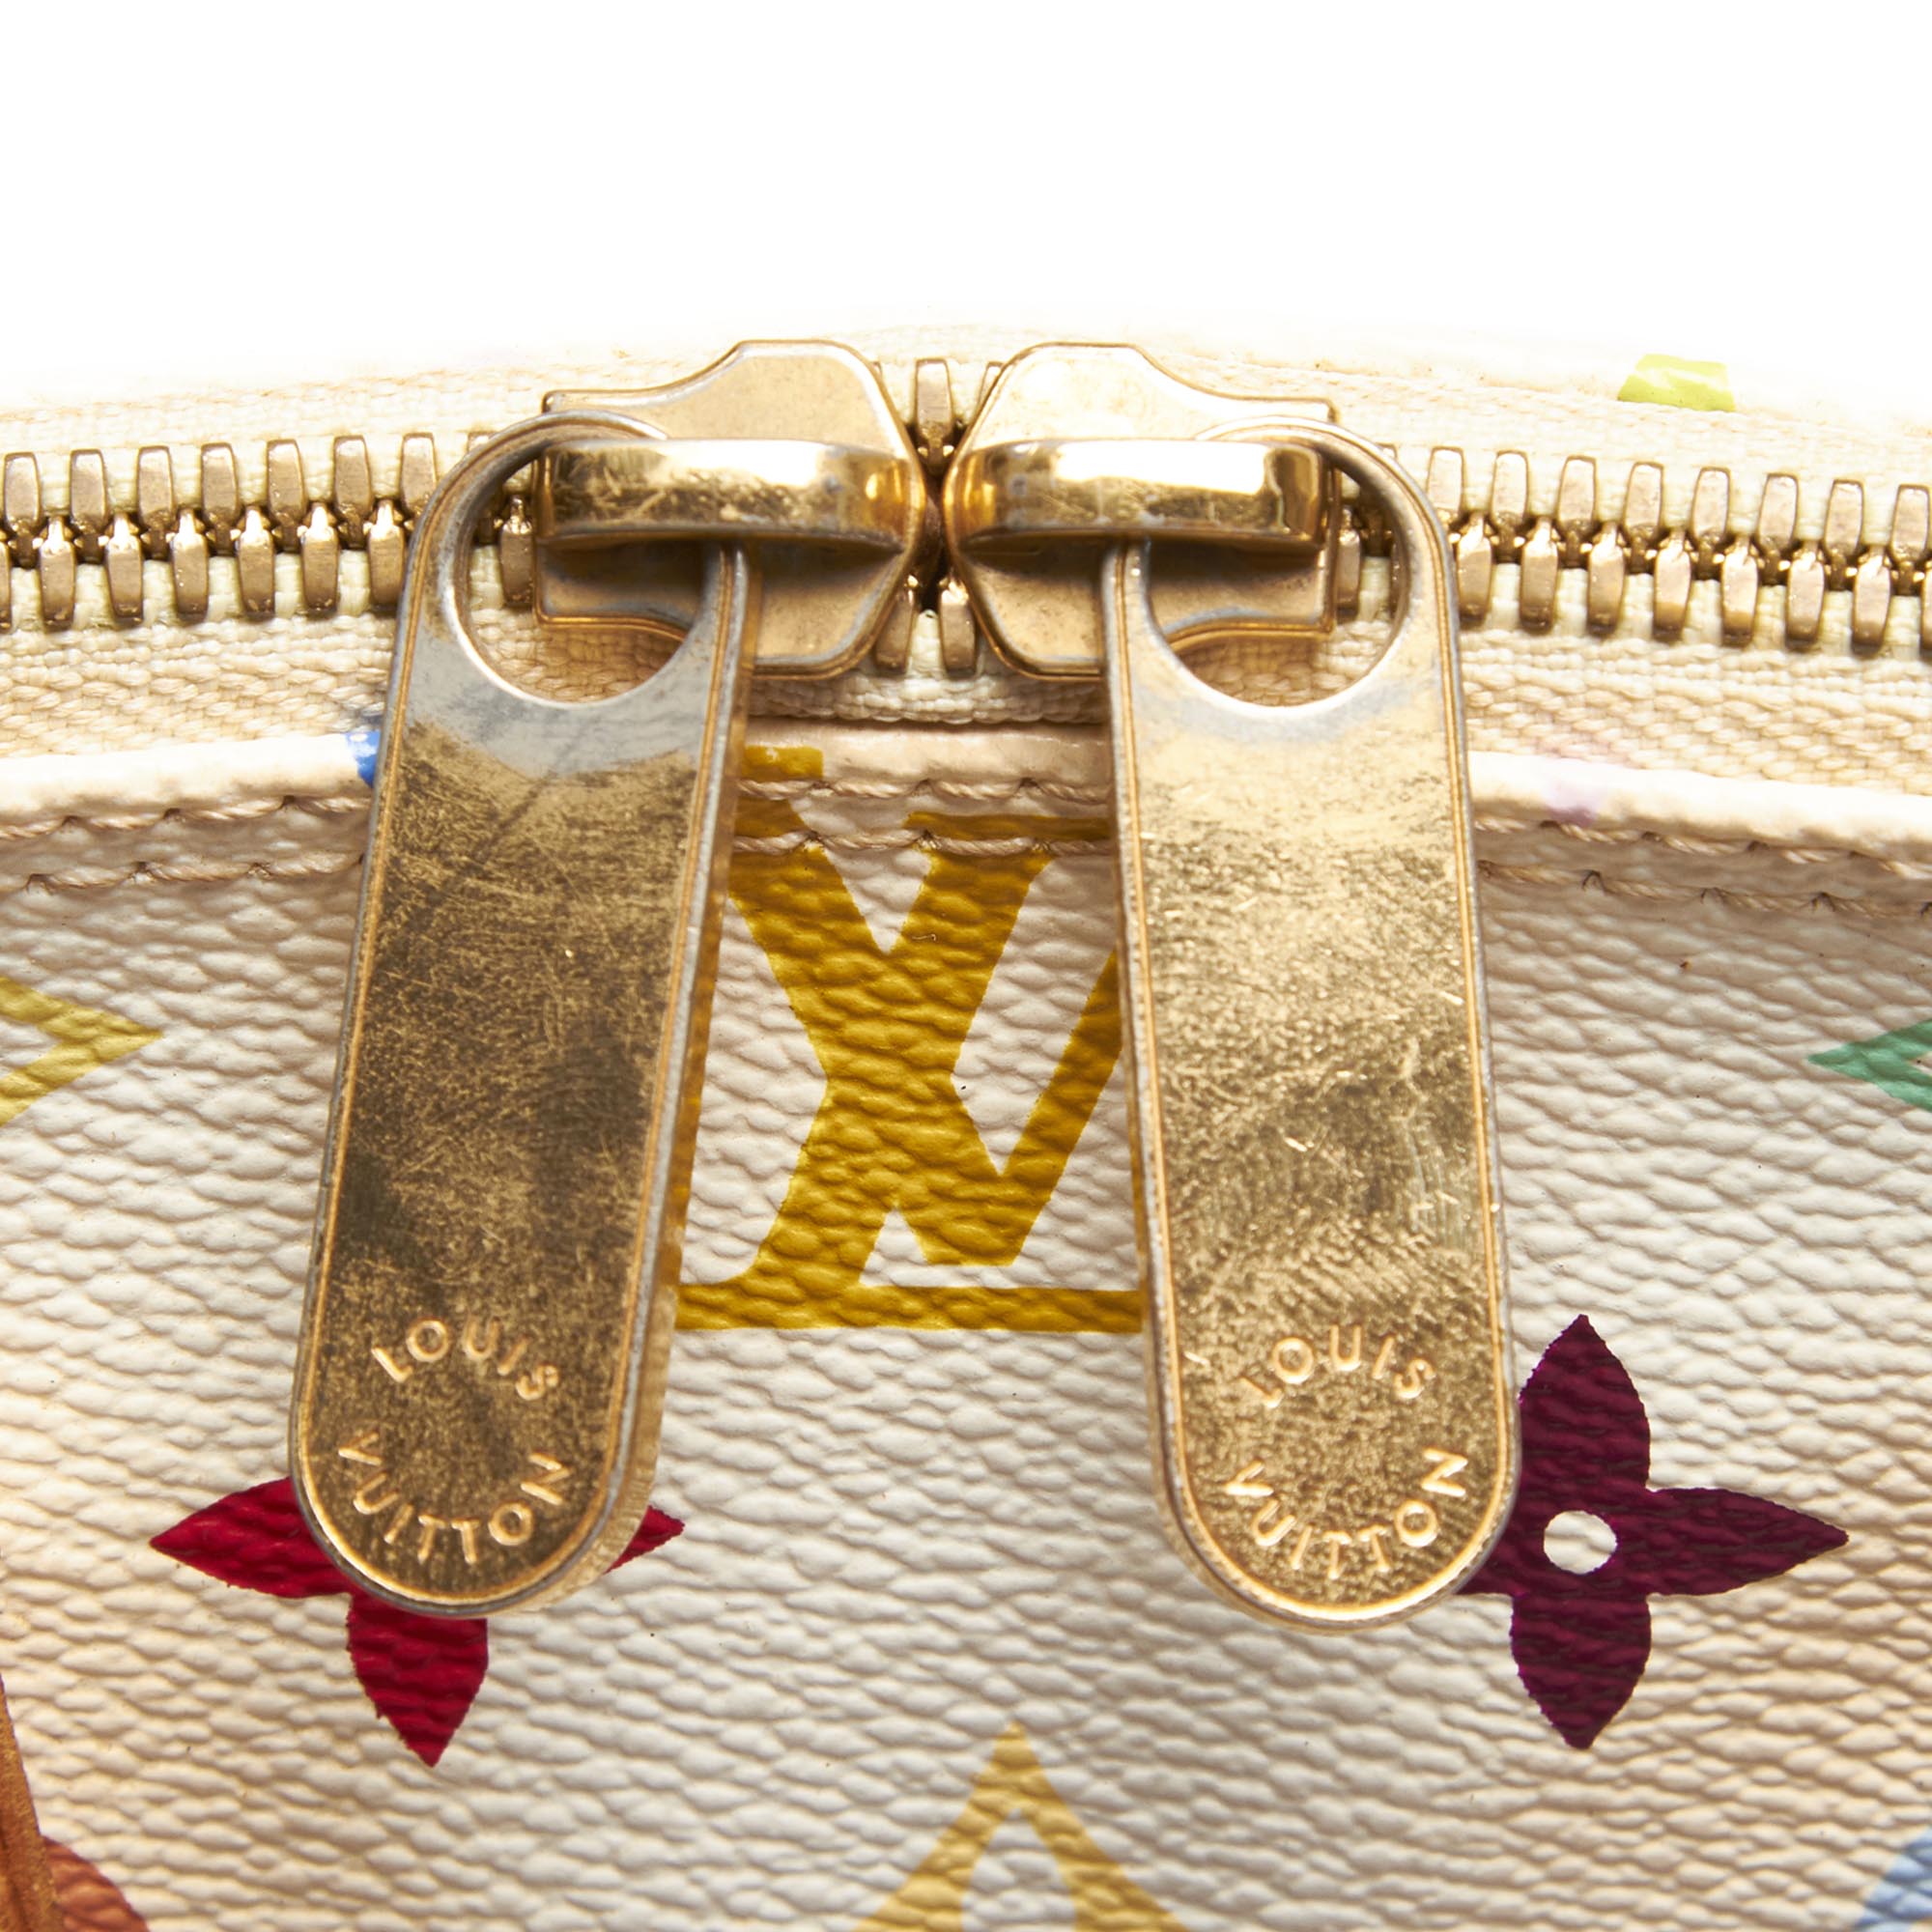 Louis Vuitton Monogram Multicolore Alma PM Handbag, the Alma PM features the Monogram Multicolore - Image 10 of 11